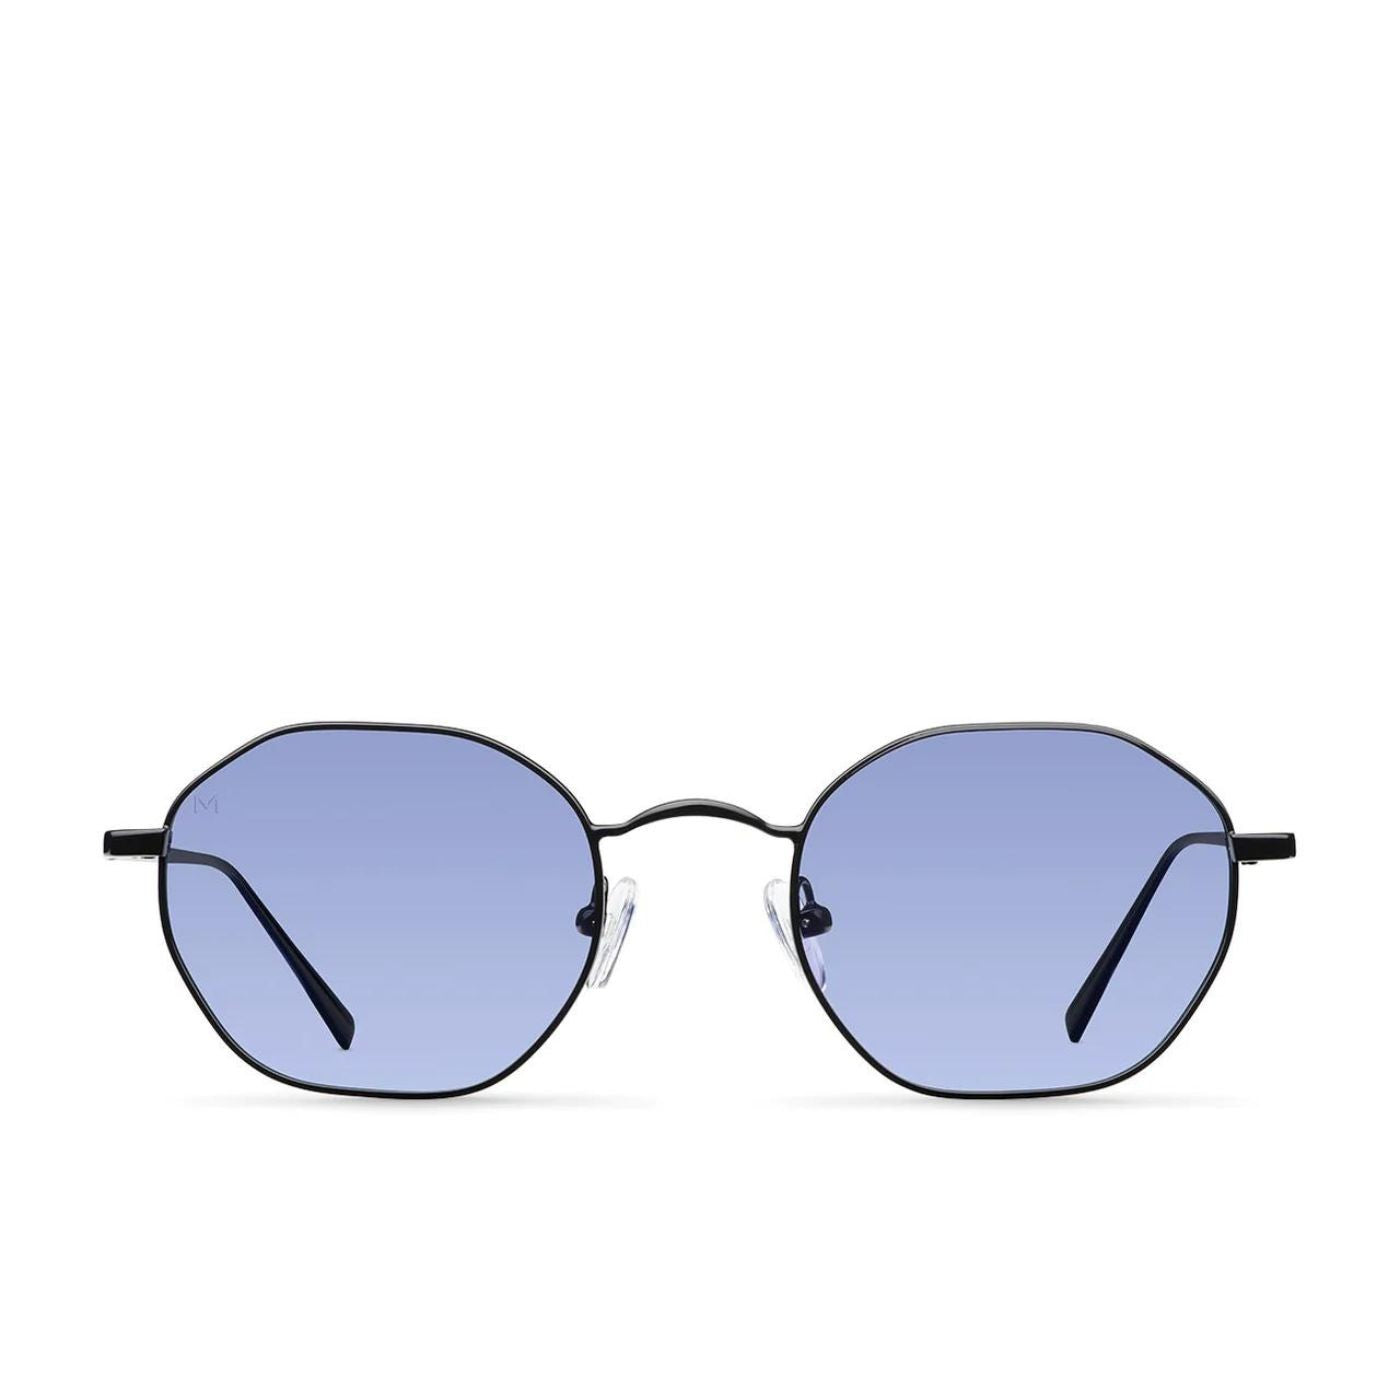 Praslin Black Purple Meller sunglasses